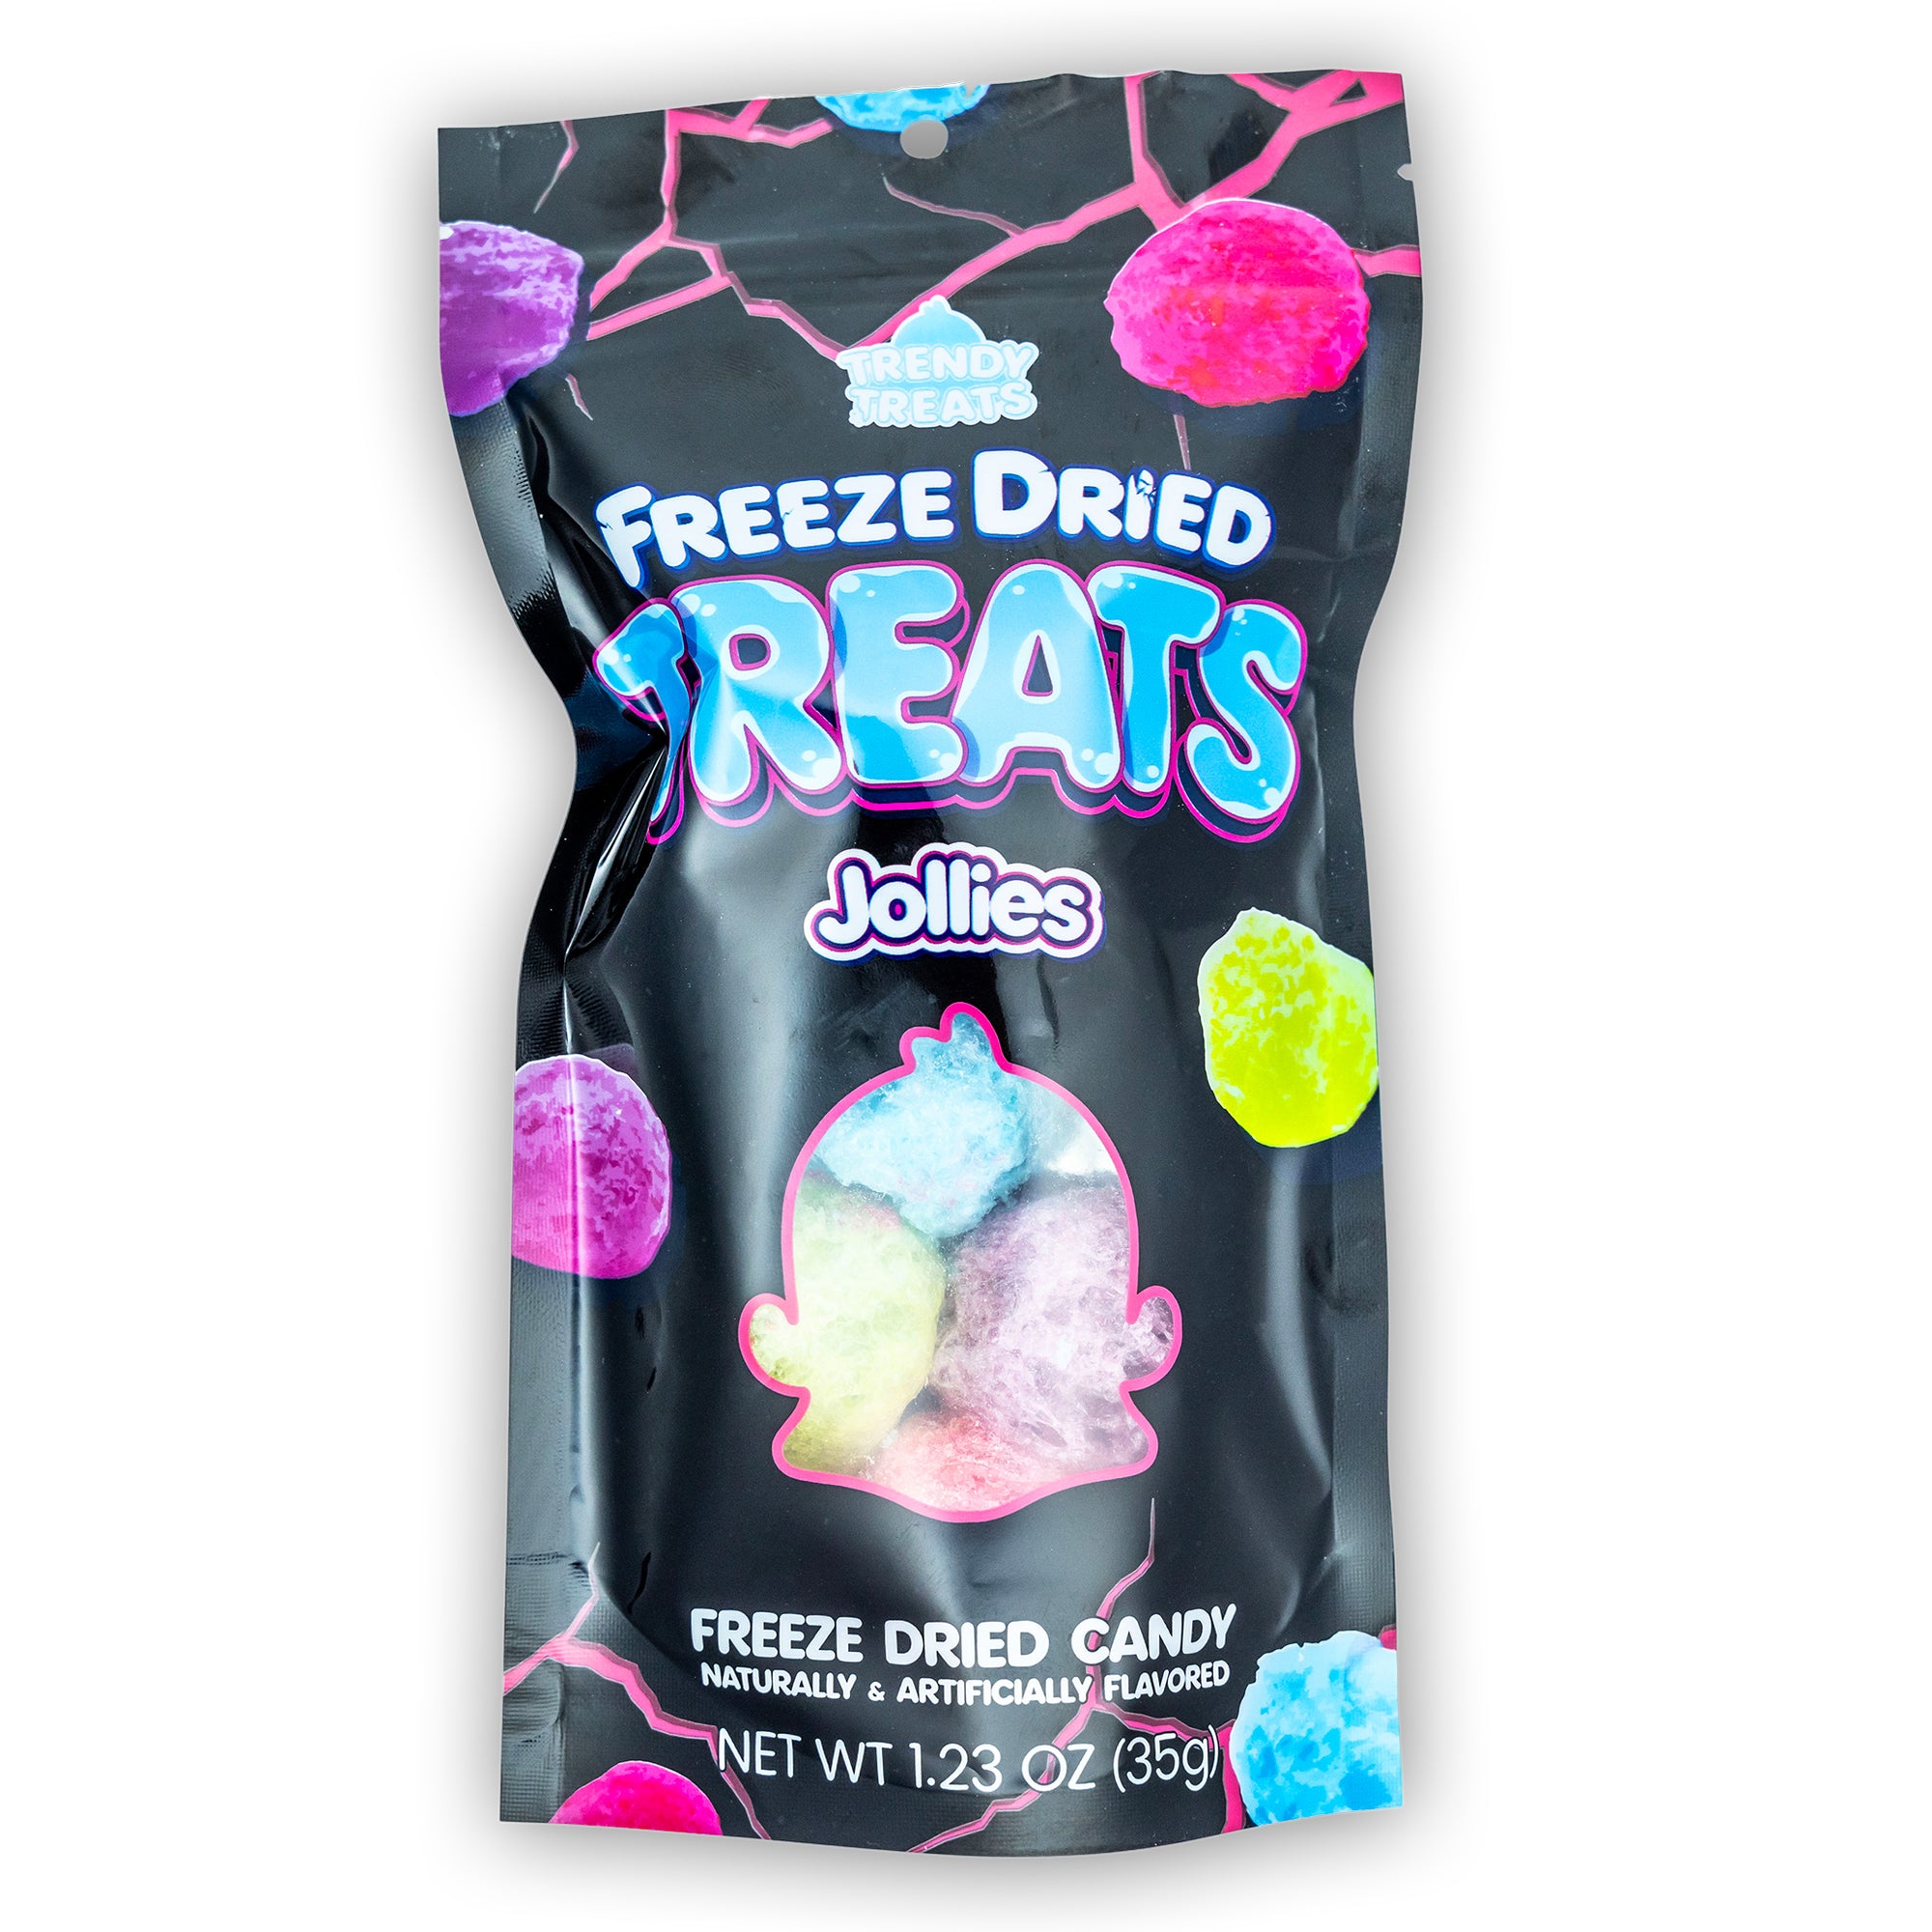 Freeze Dried Jolly Balls